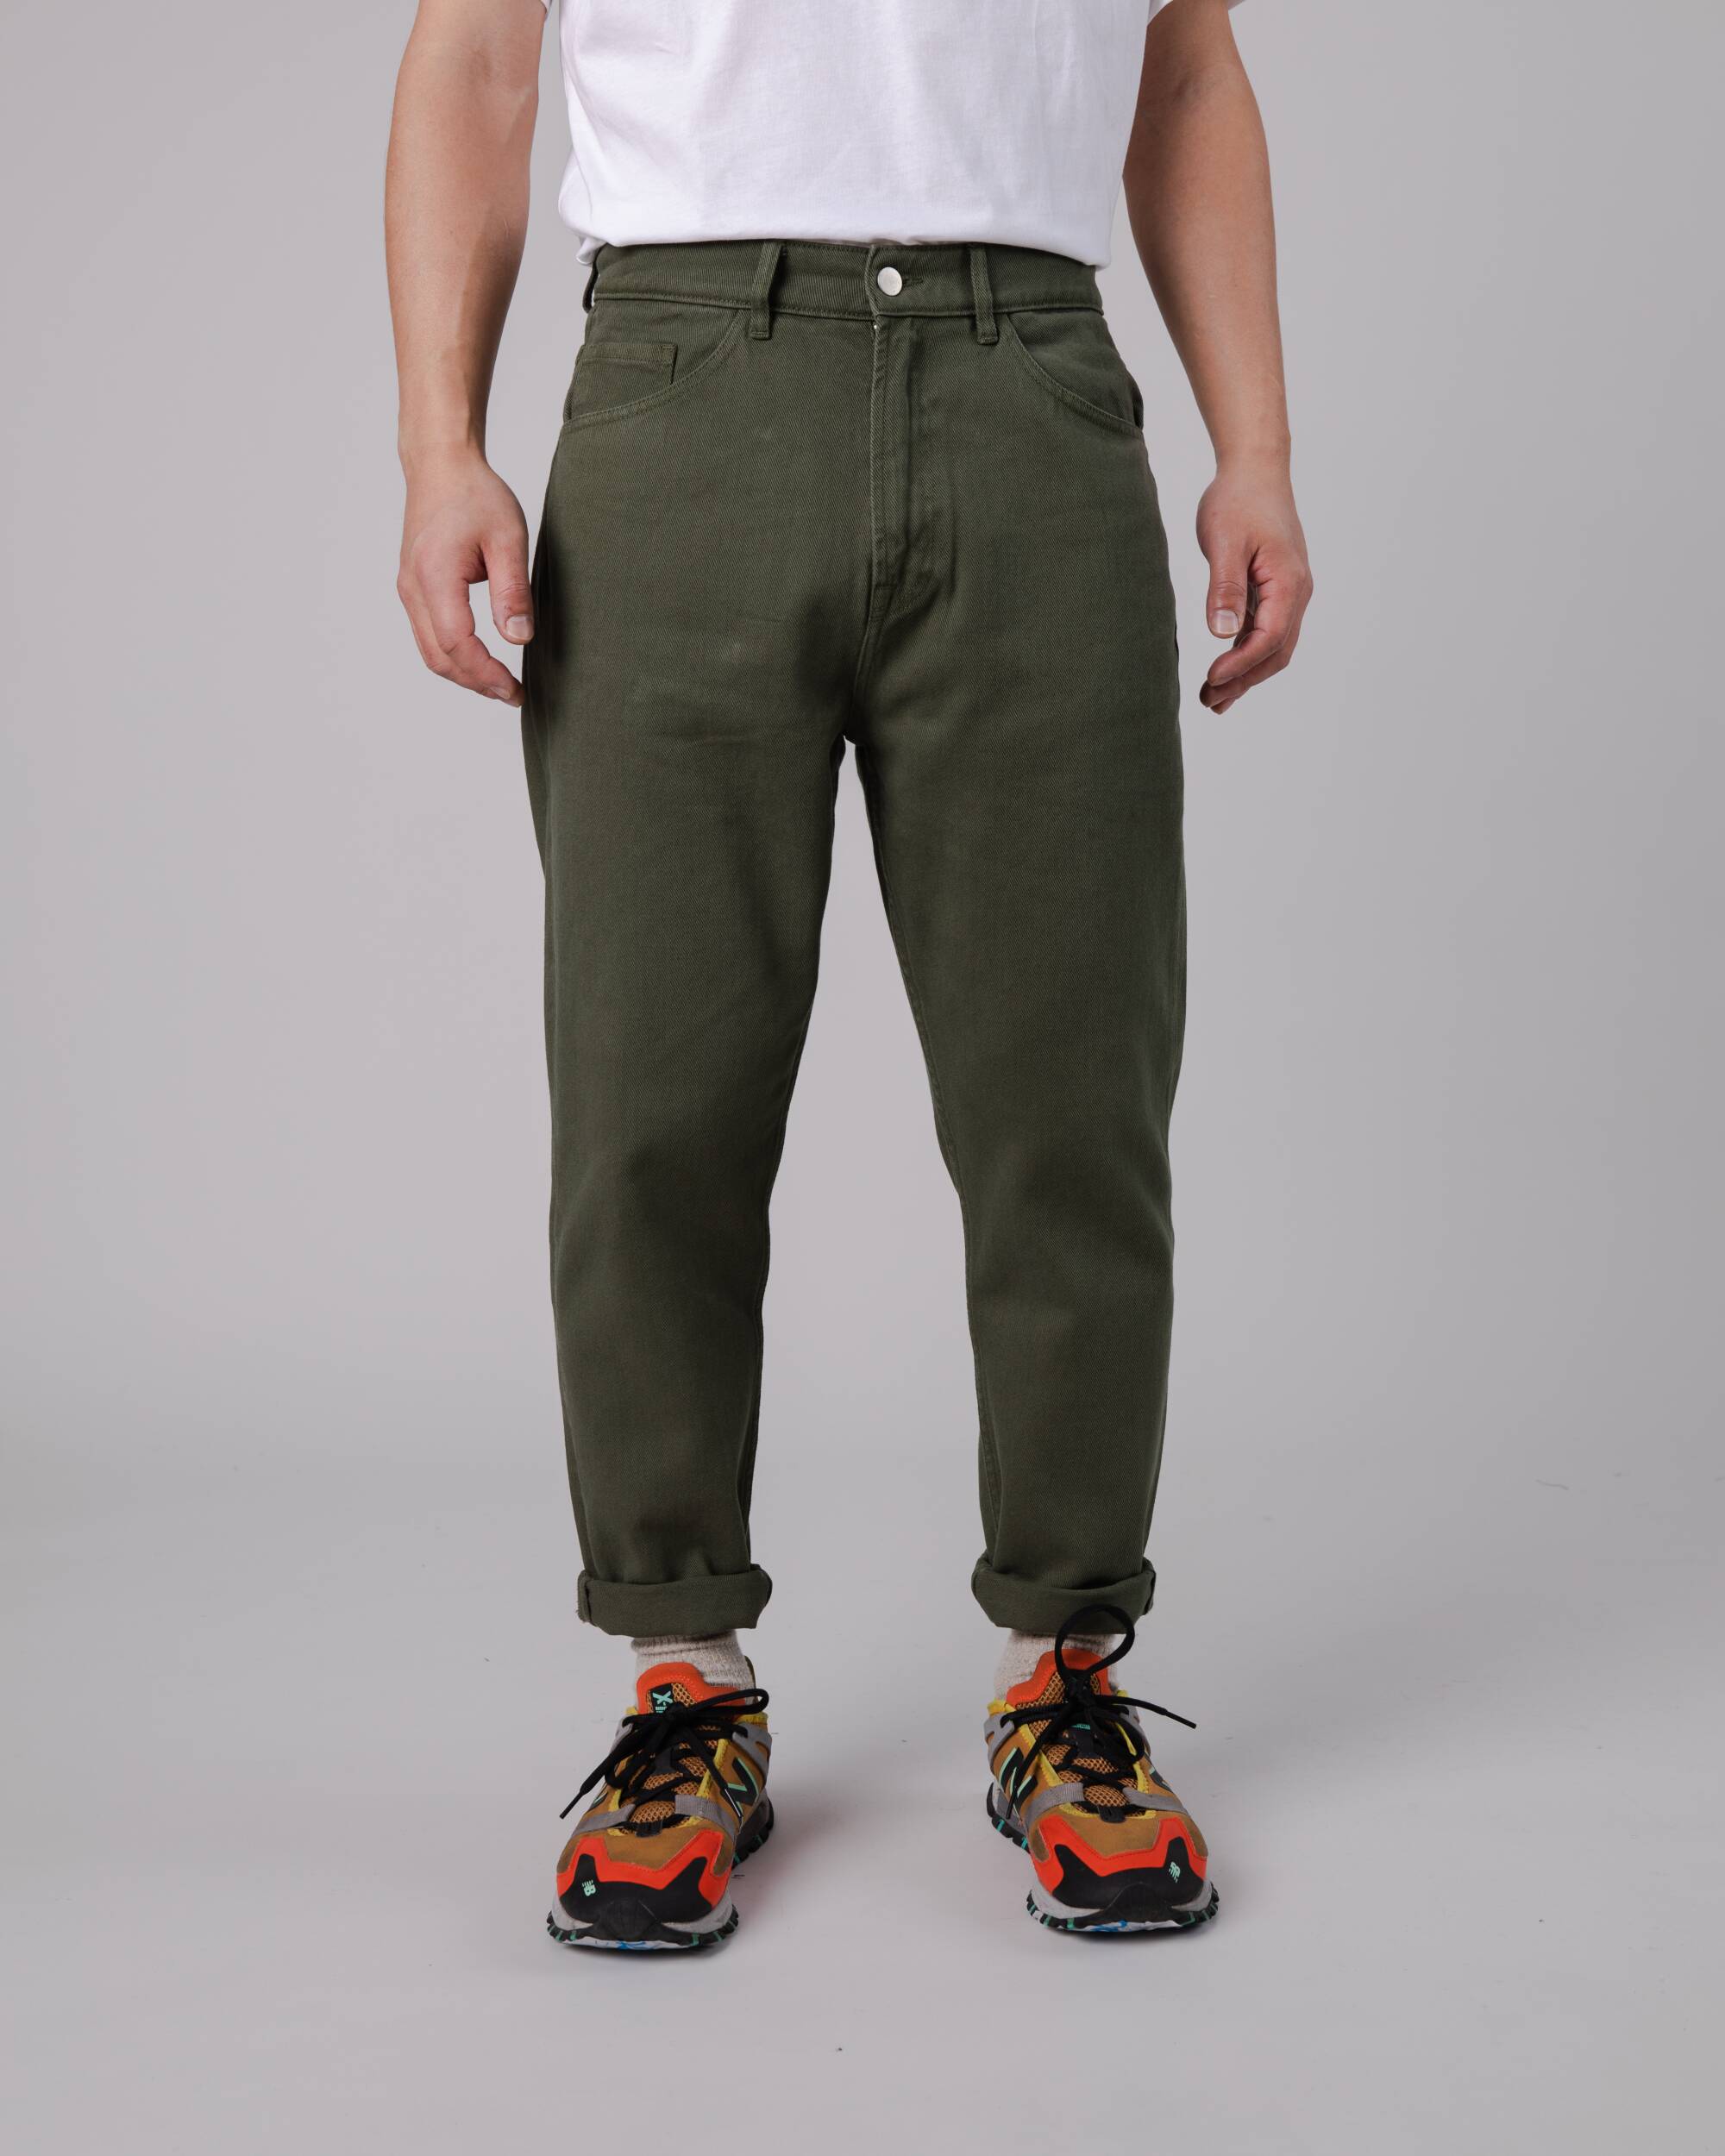 Green 5 Pocket Stone pants made of organic cotton from Brava Fabrics